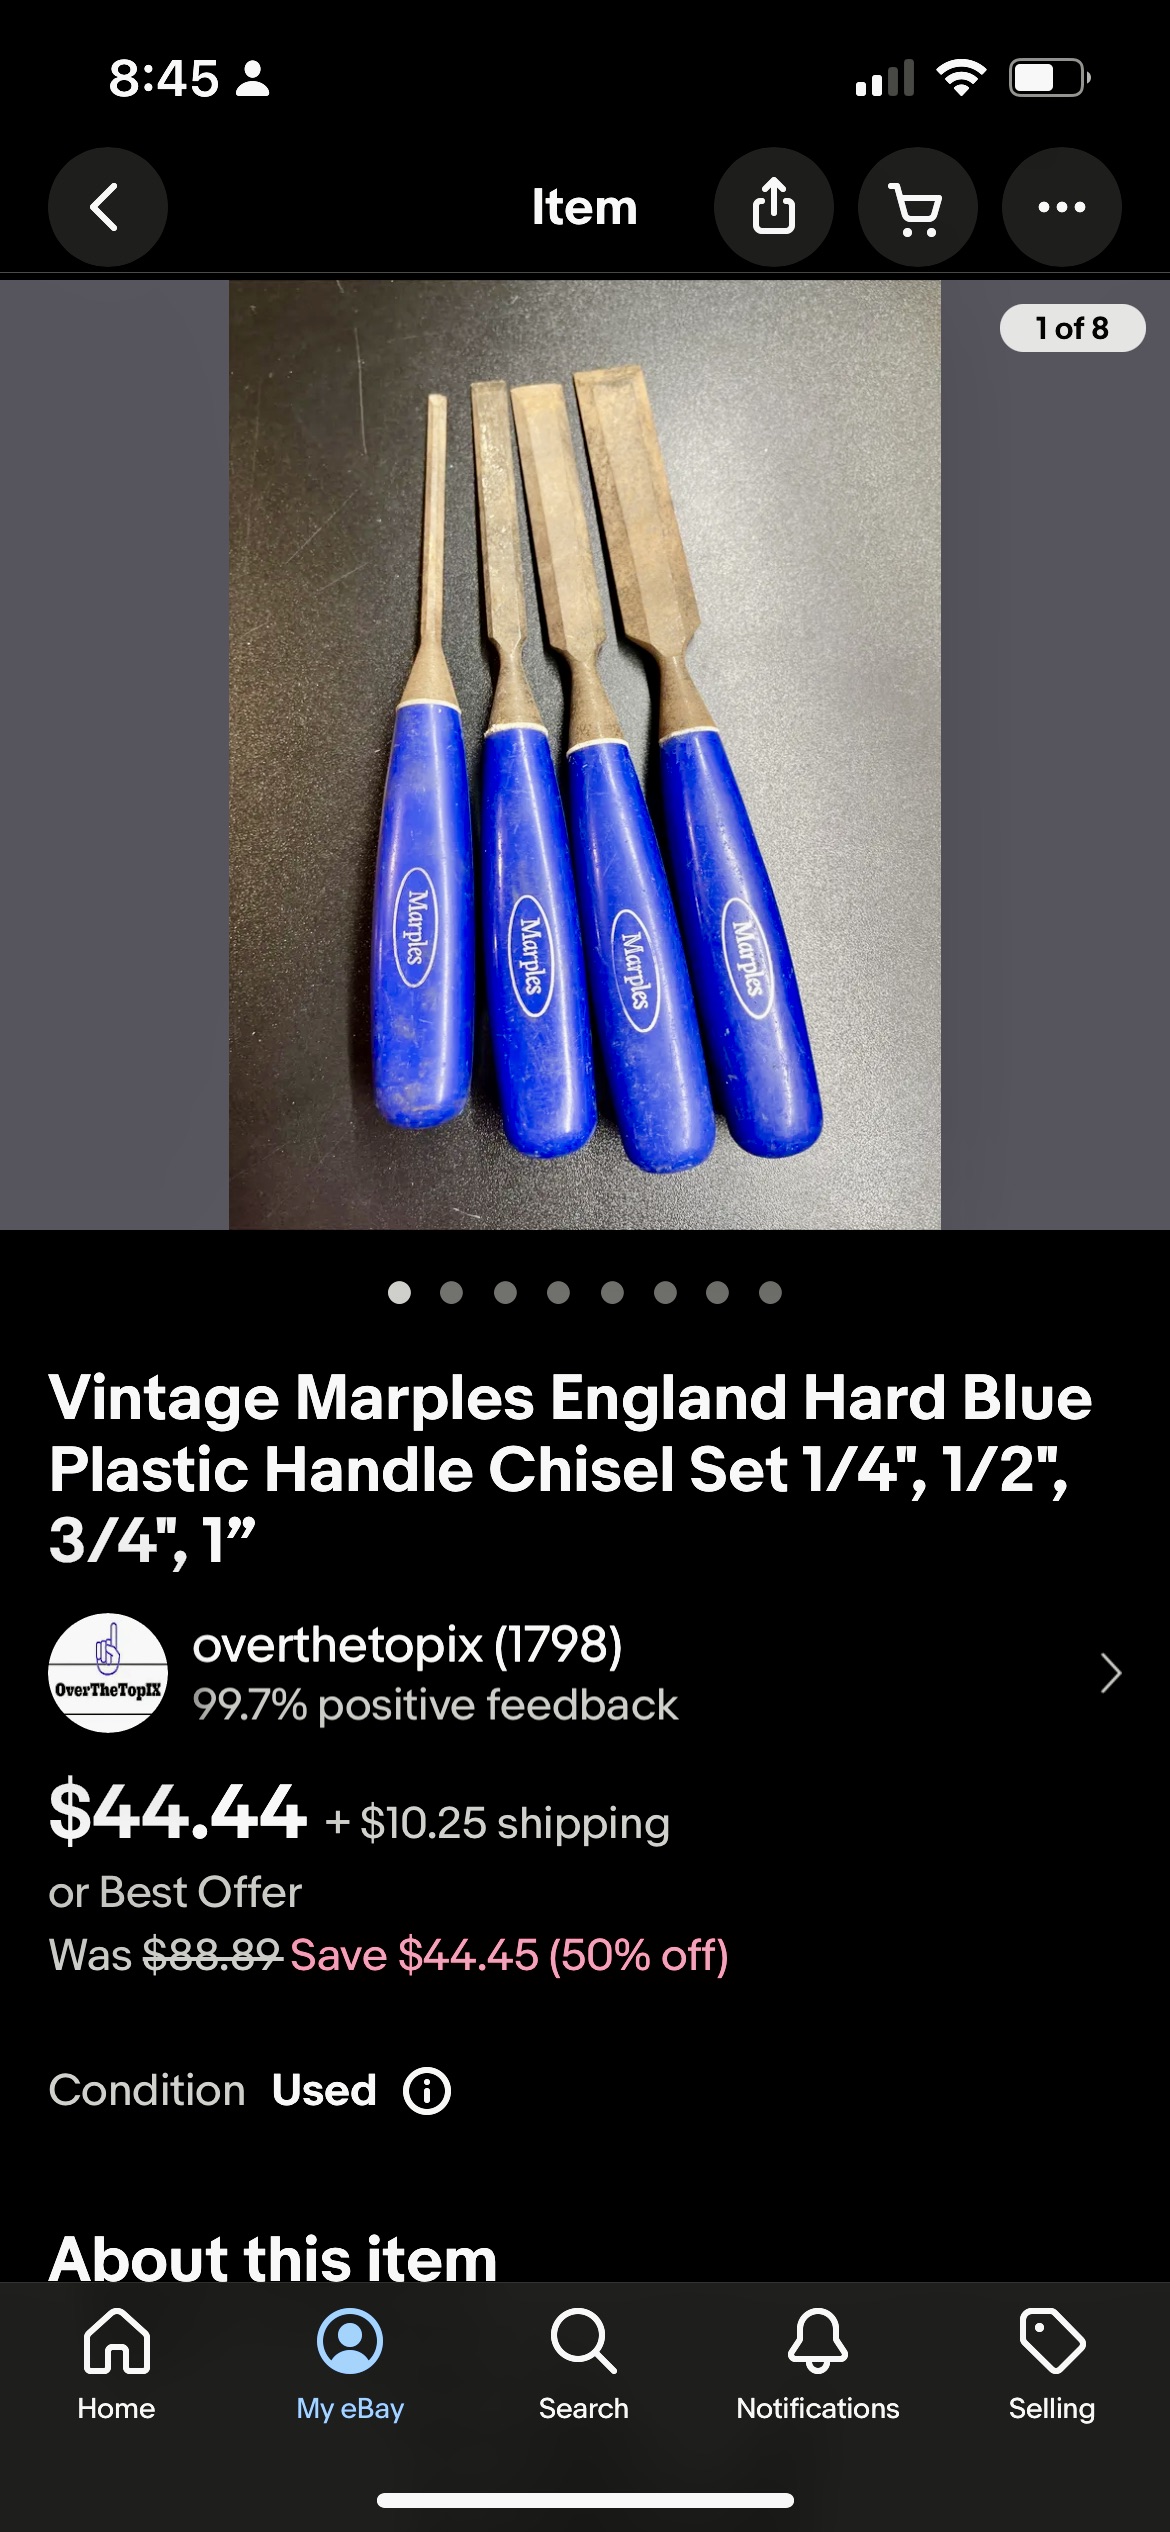 ebay posting of Marple chisels